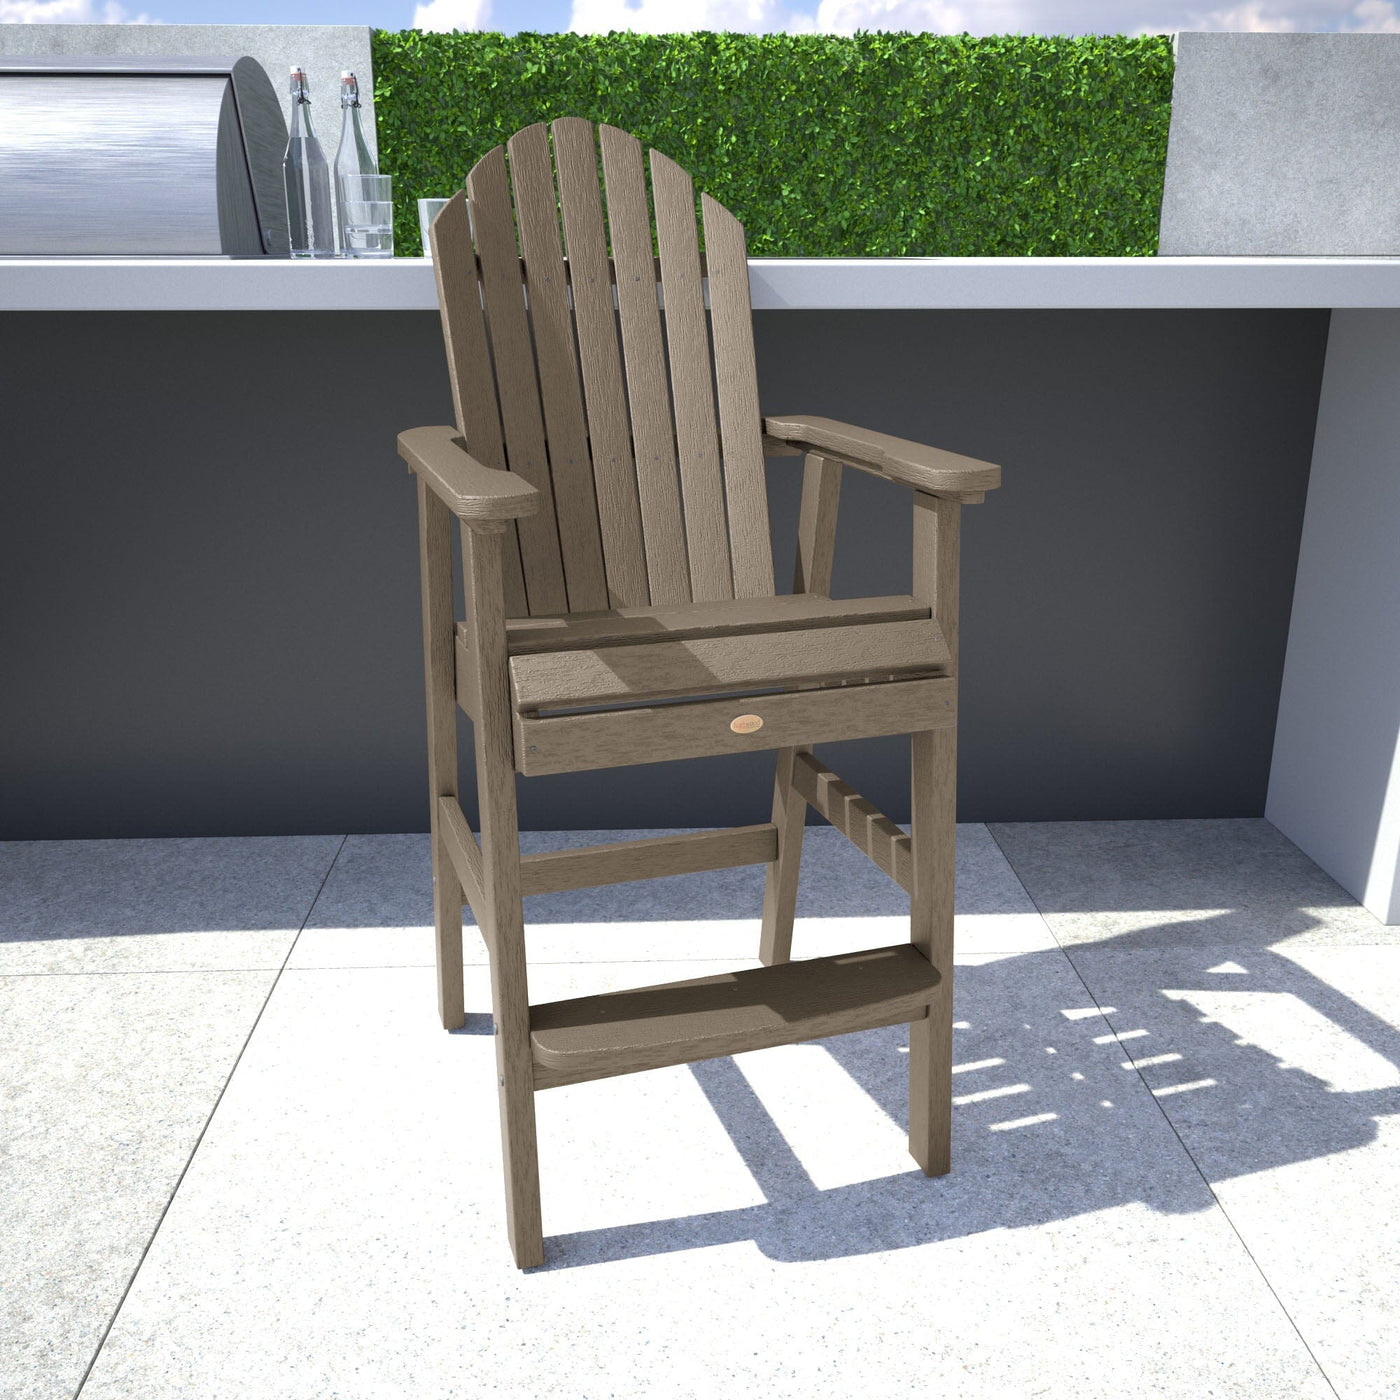 Light brown Hamilton Bar Height Chair in outdoor kitchen